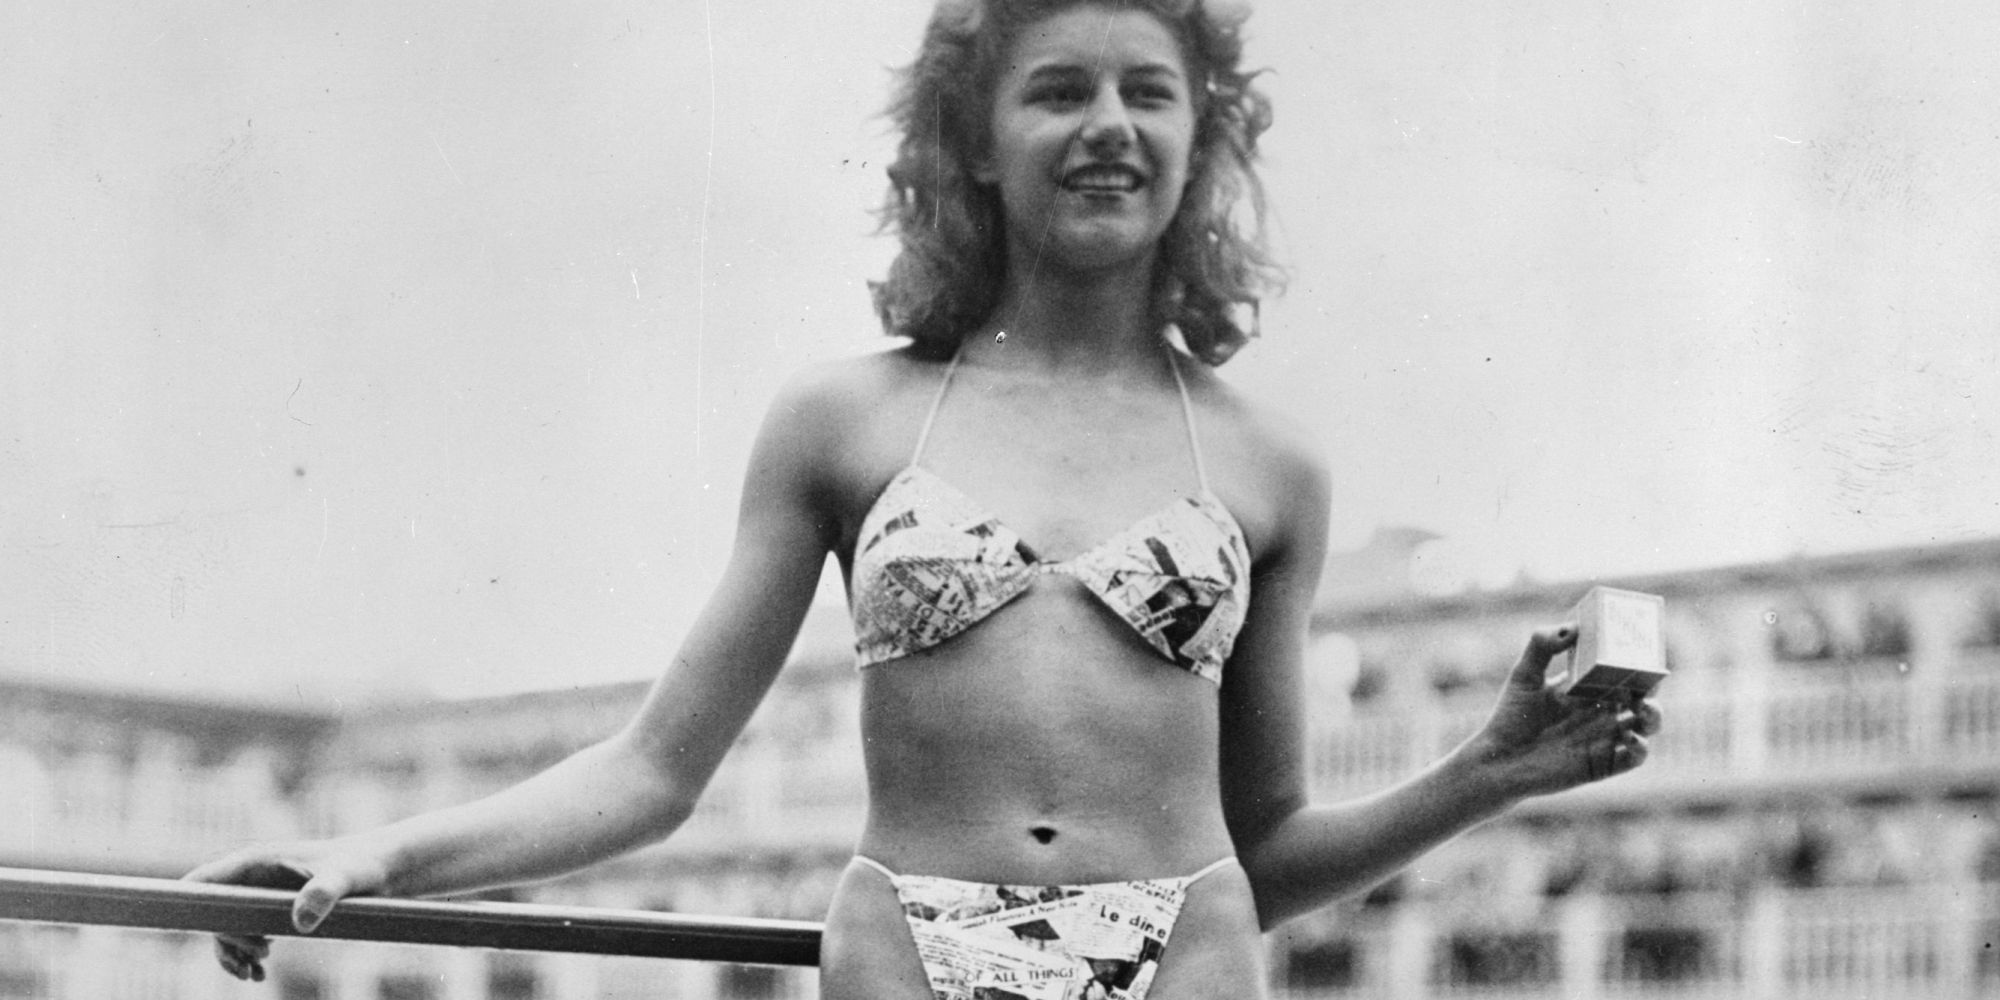 Le bikini fête ses 70 ans aujourd’hui! 